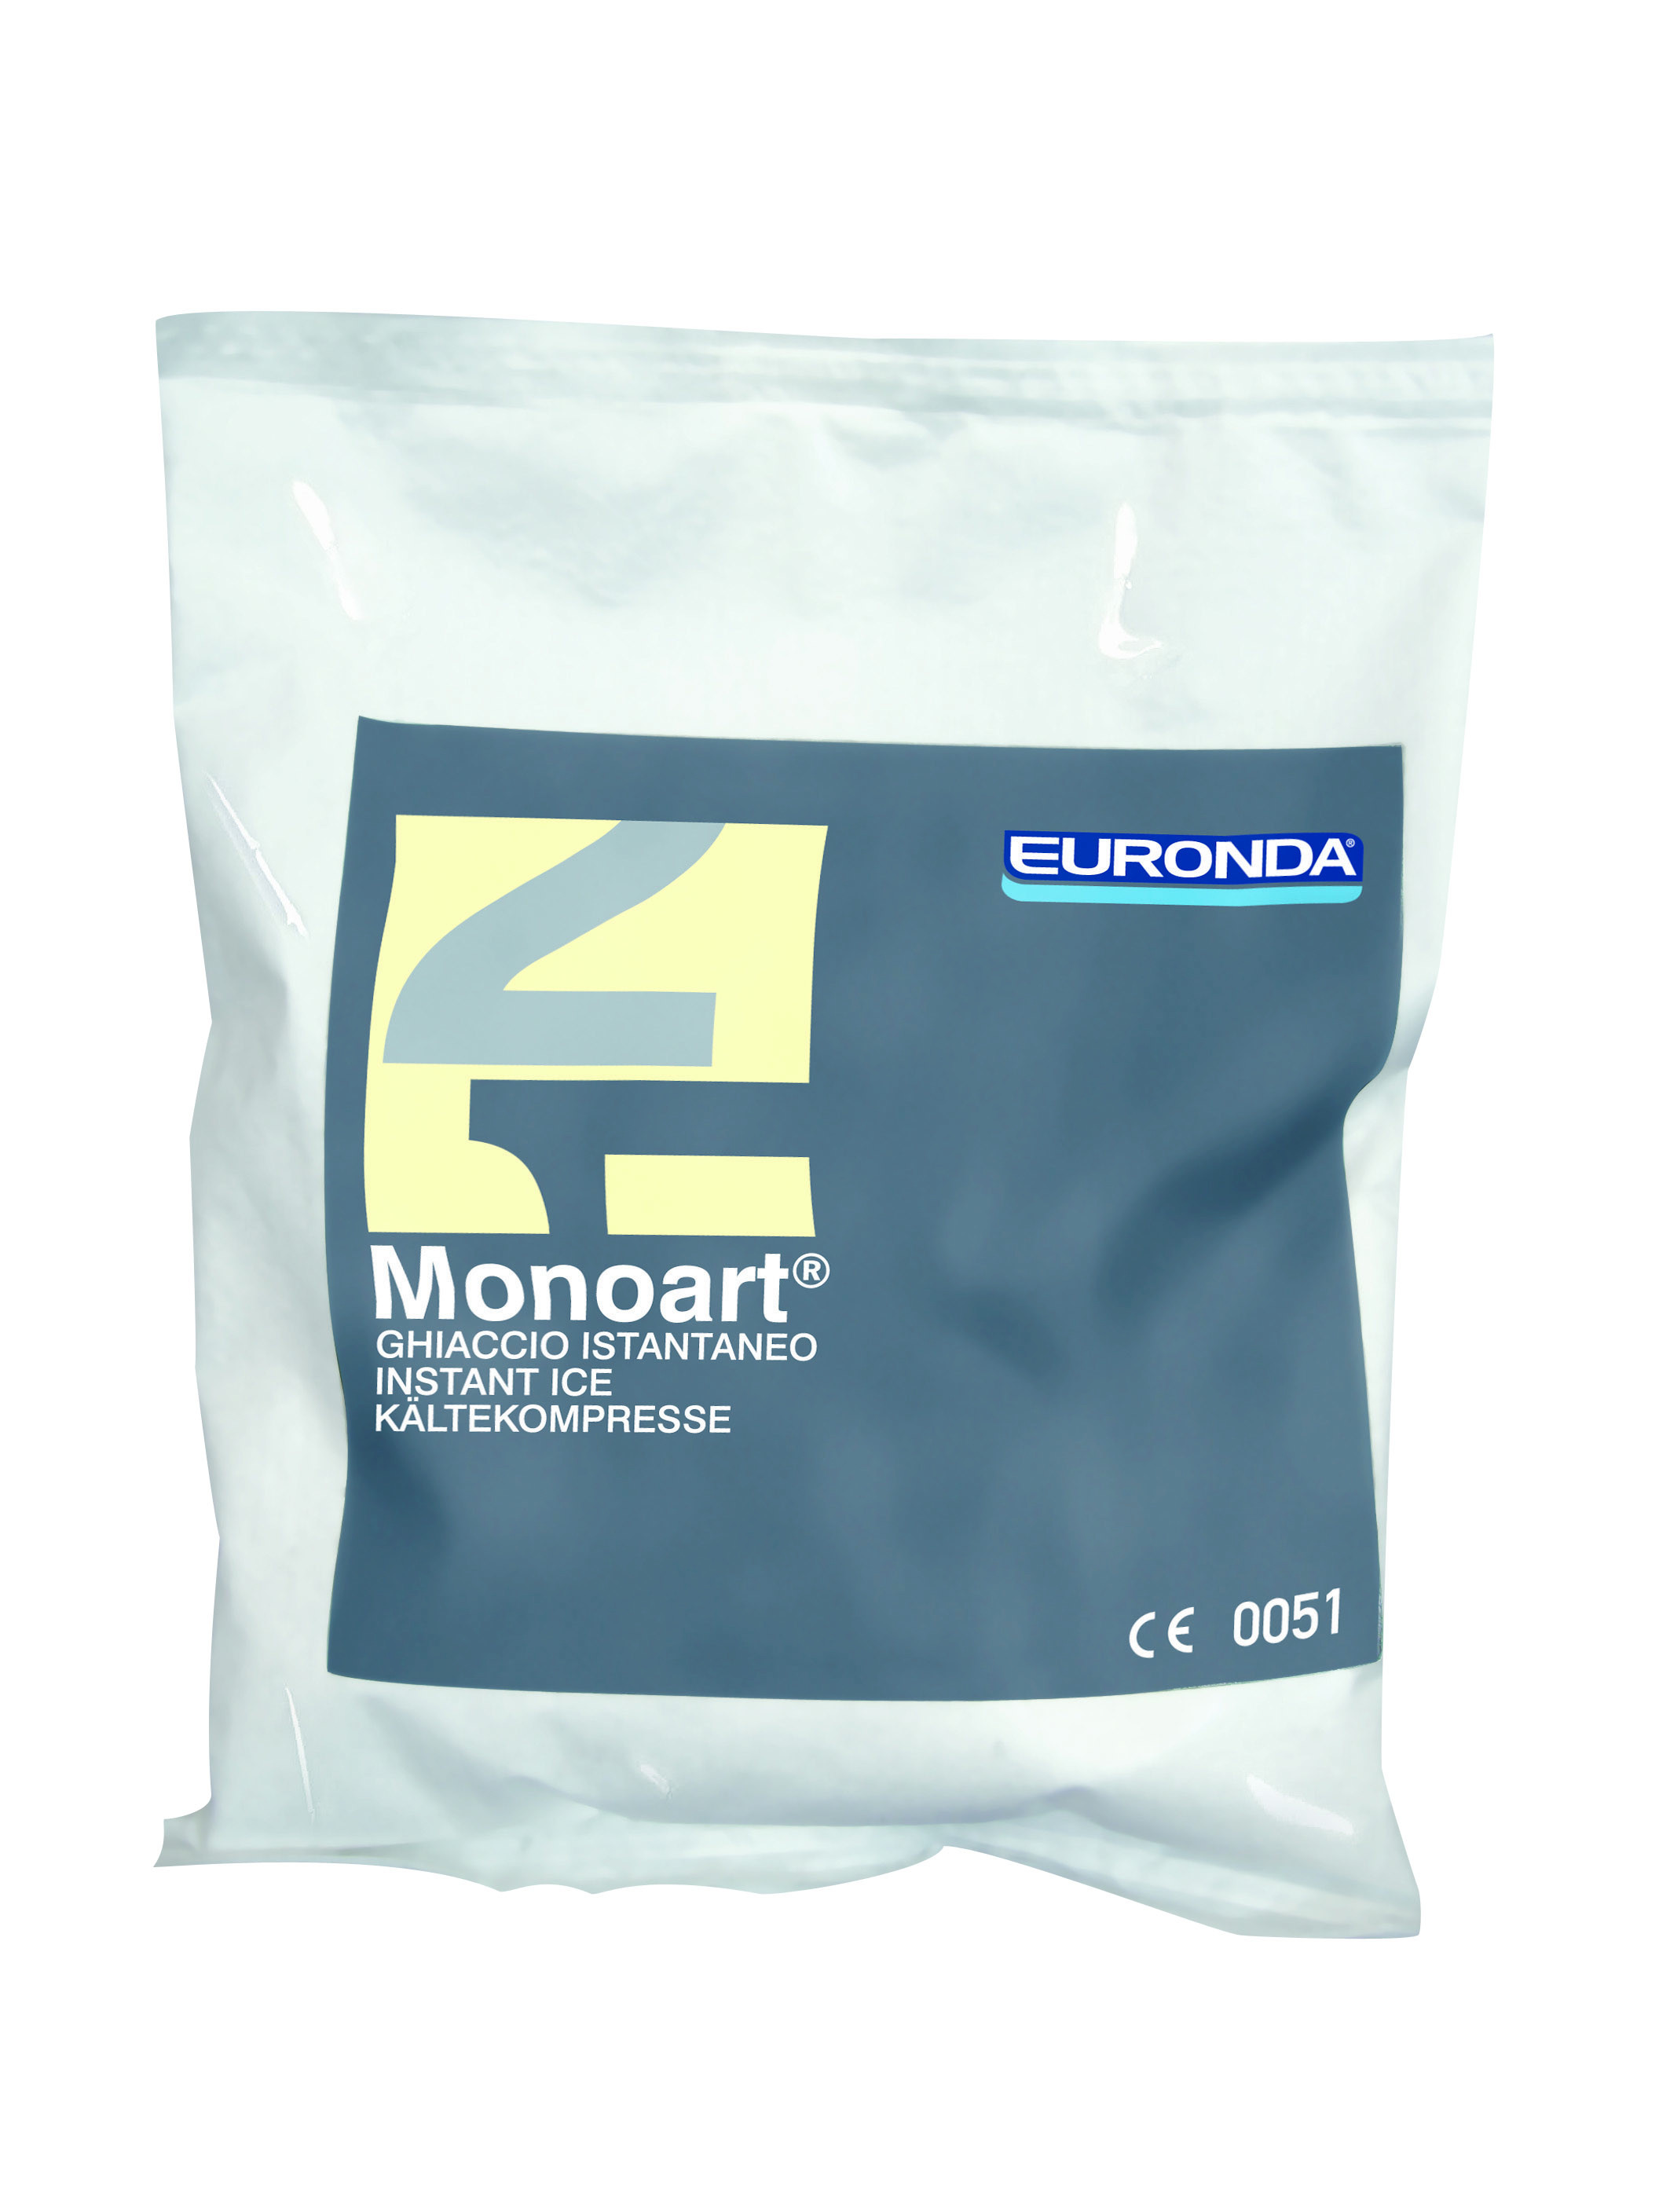 Monoart® Einmal-Kältekompressen TNT - 10 Stk.